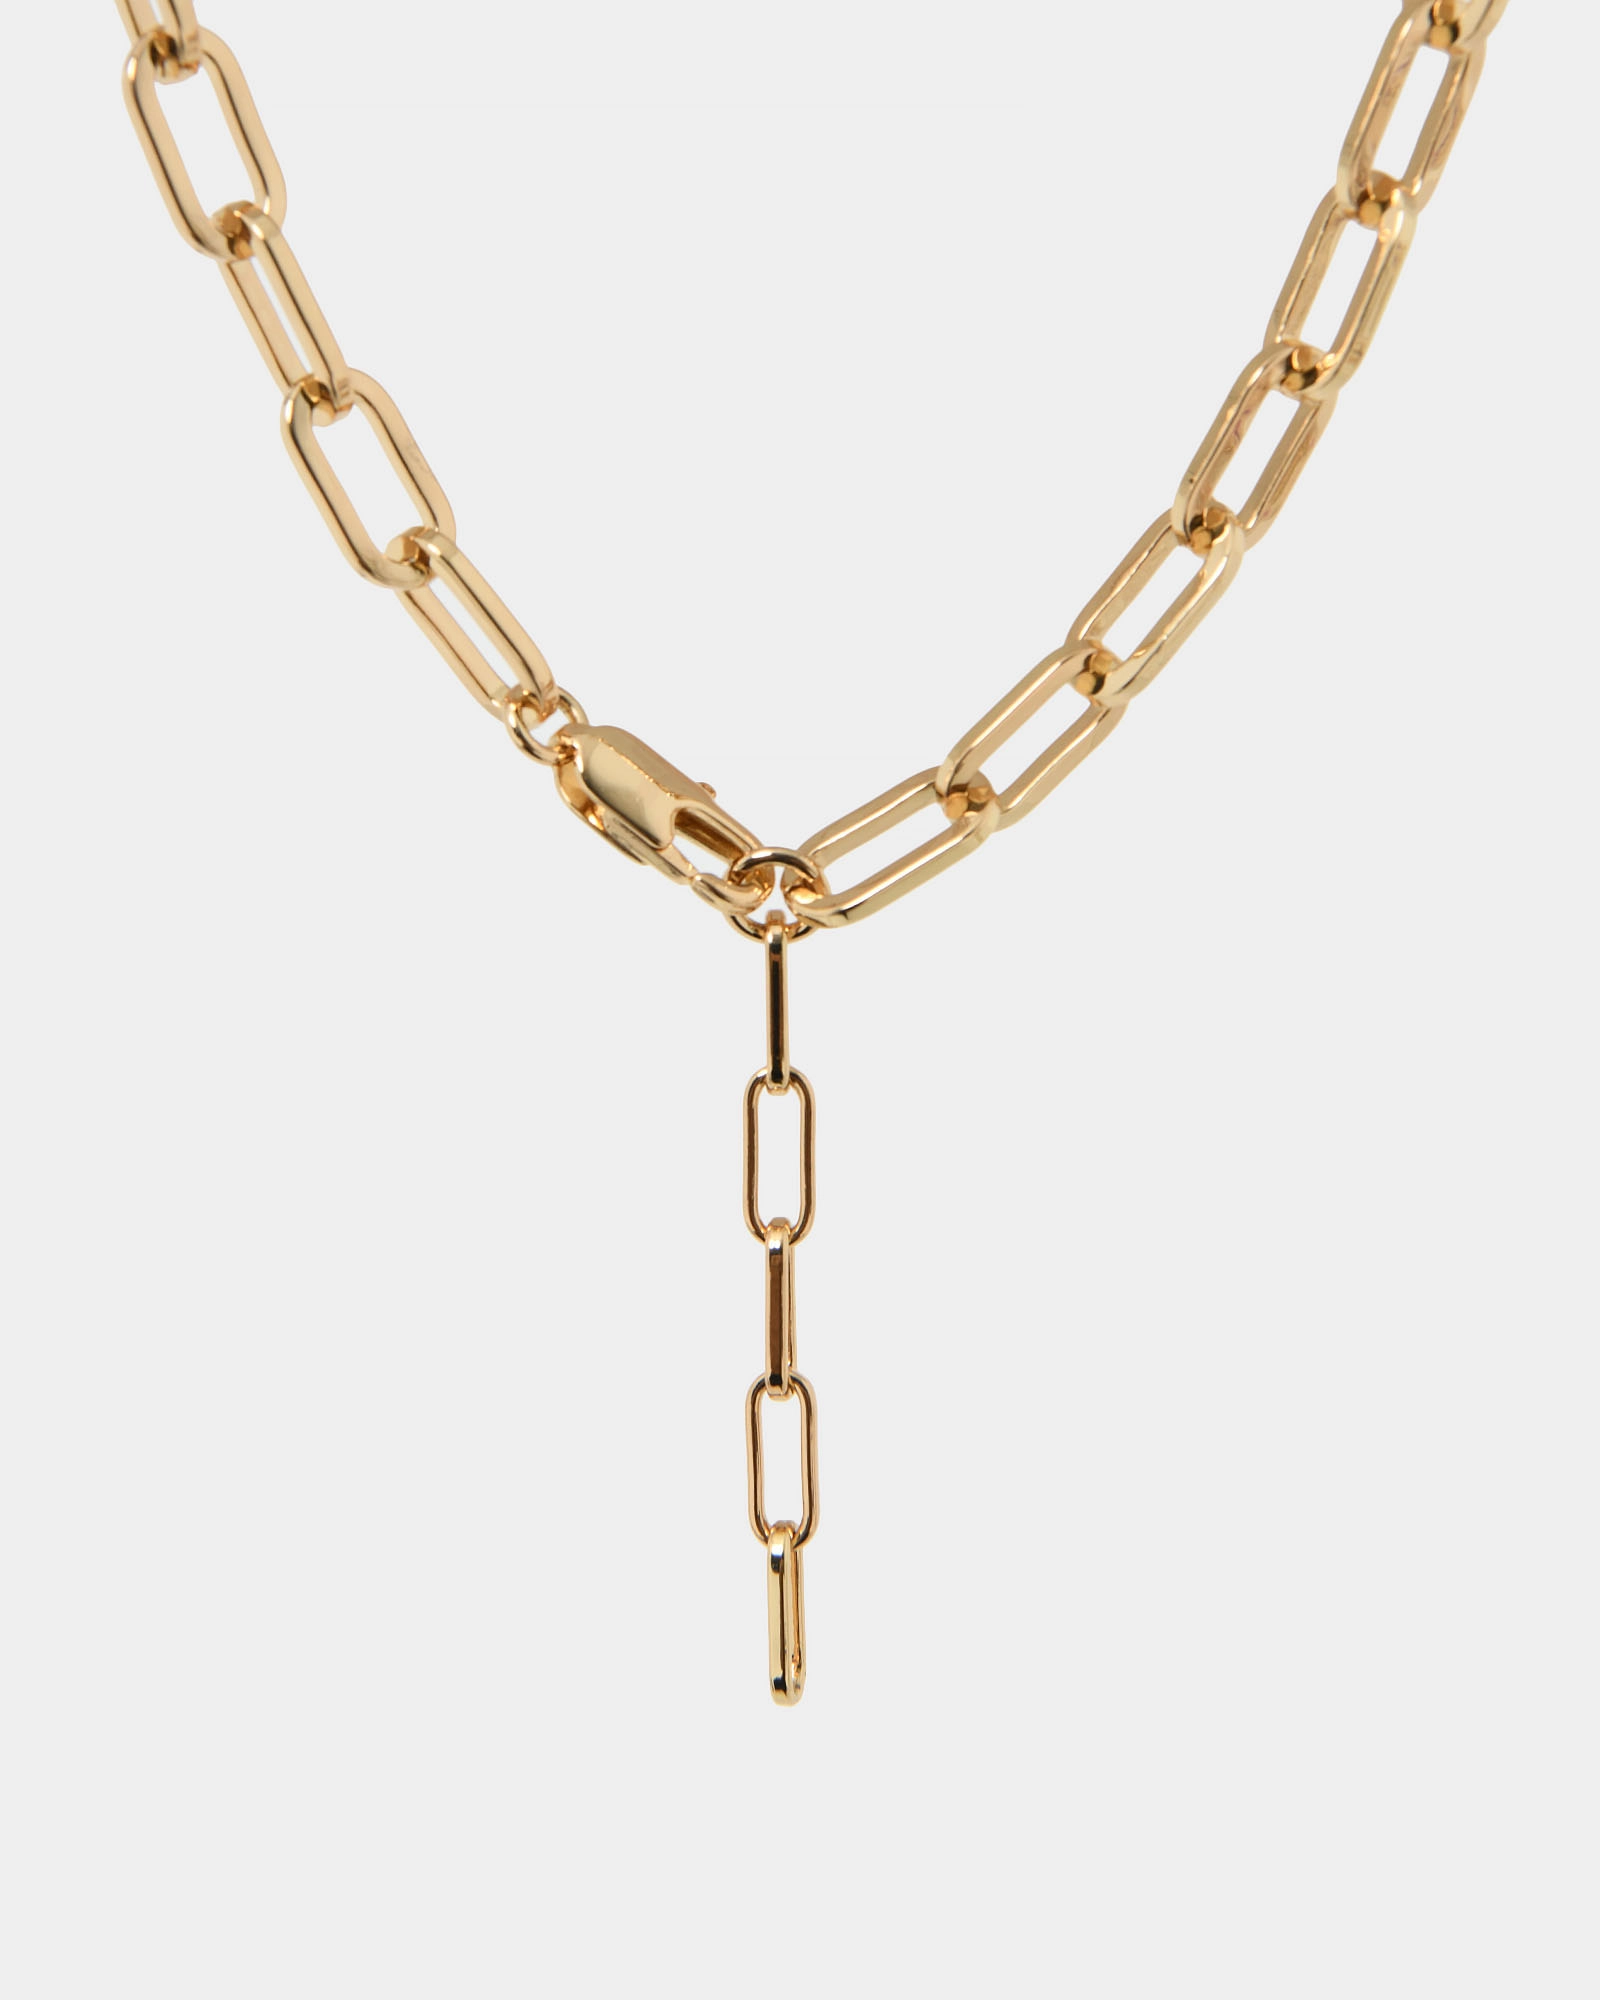 Savanna 16k Gold Plated Necklace 